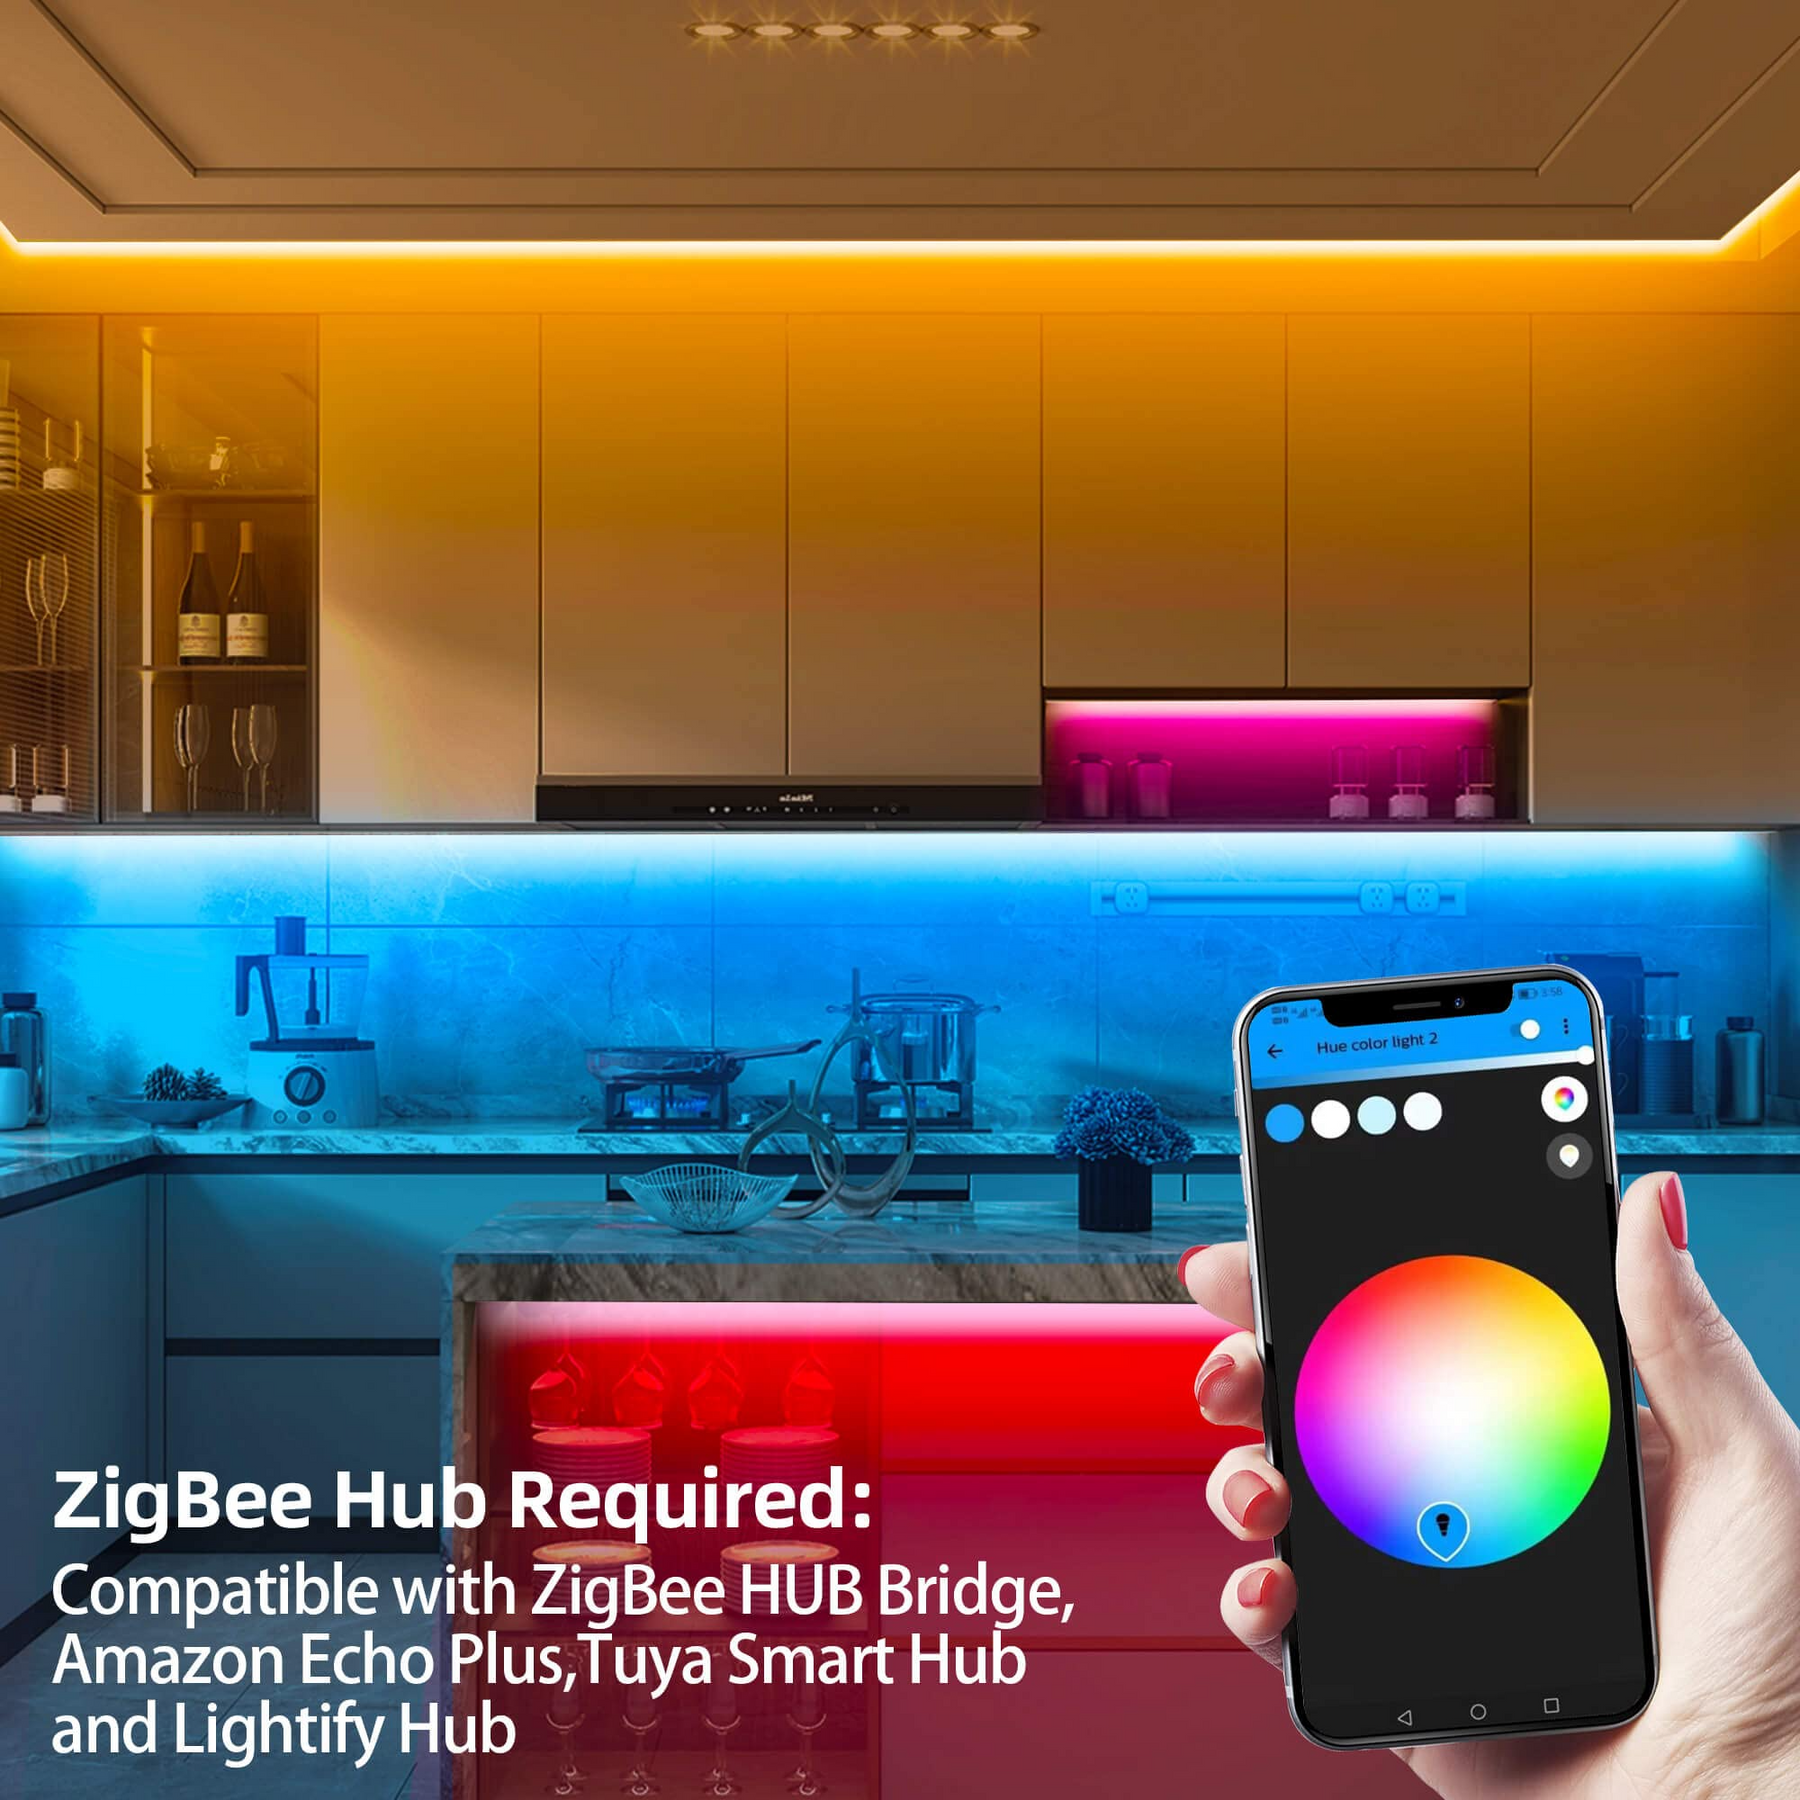 Smart ZigBee RGB LED Controller for 12V RGB LED Strips – GIDERWEL